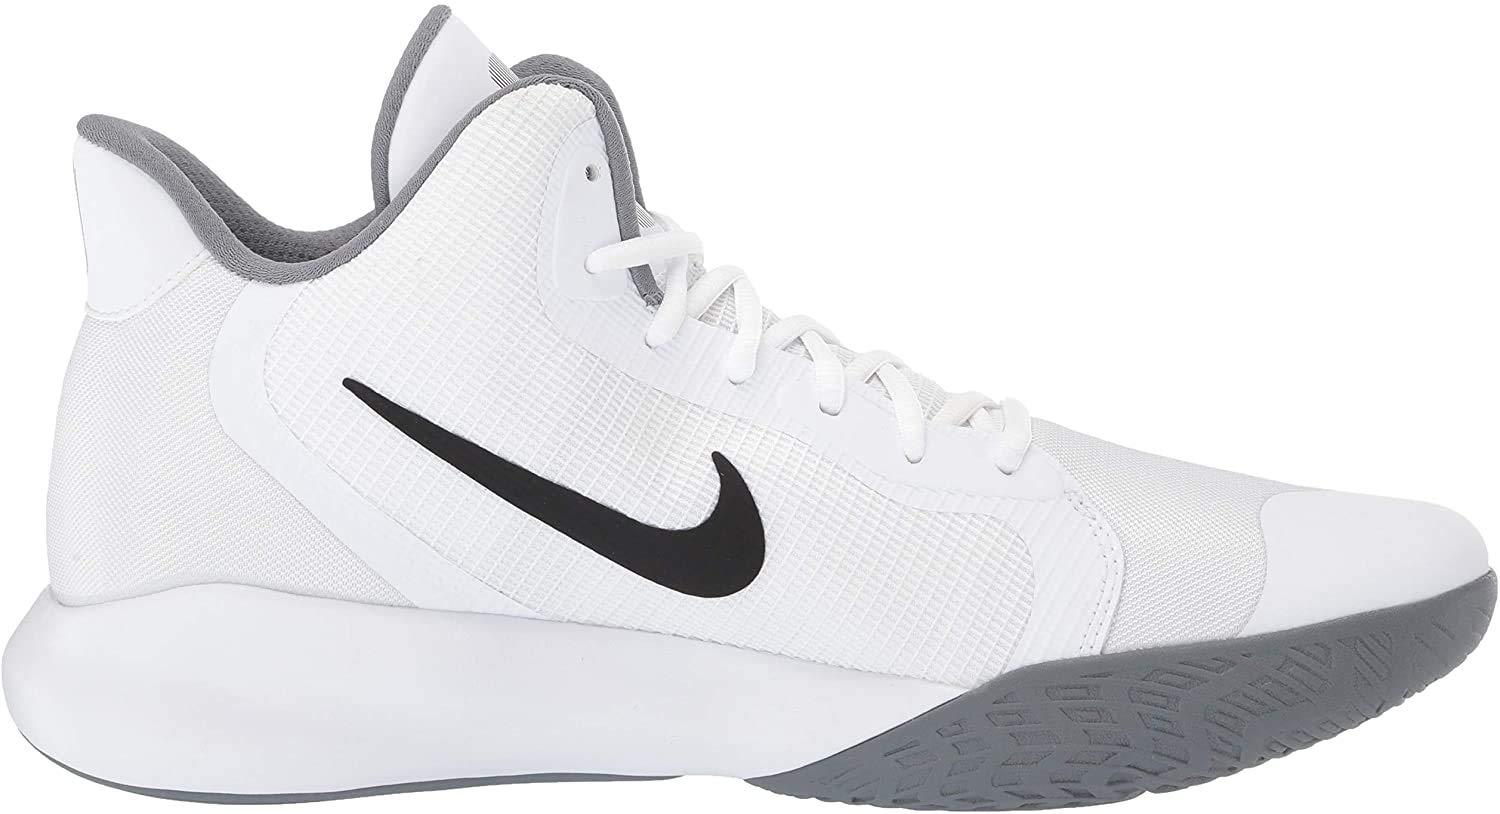 Nike Precision Iii Basketball Shoe in White/Black (White) - Save 39% | Lyst